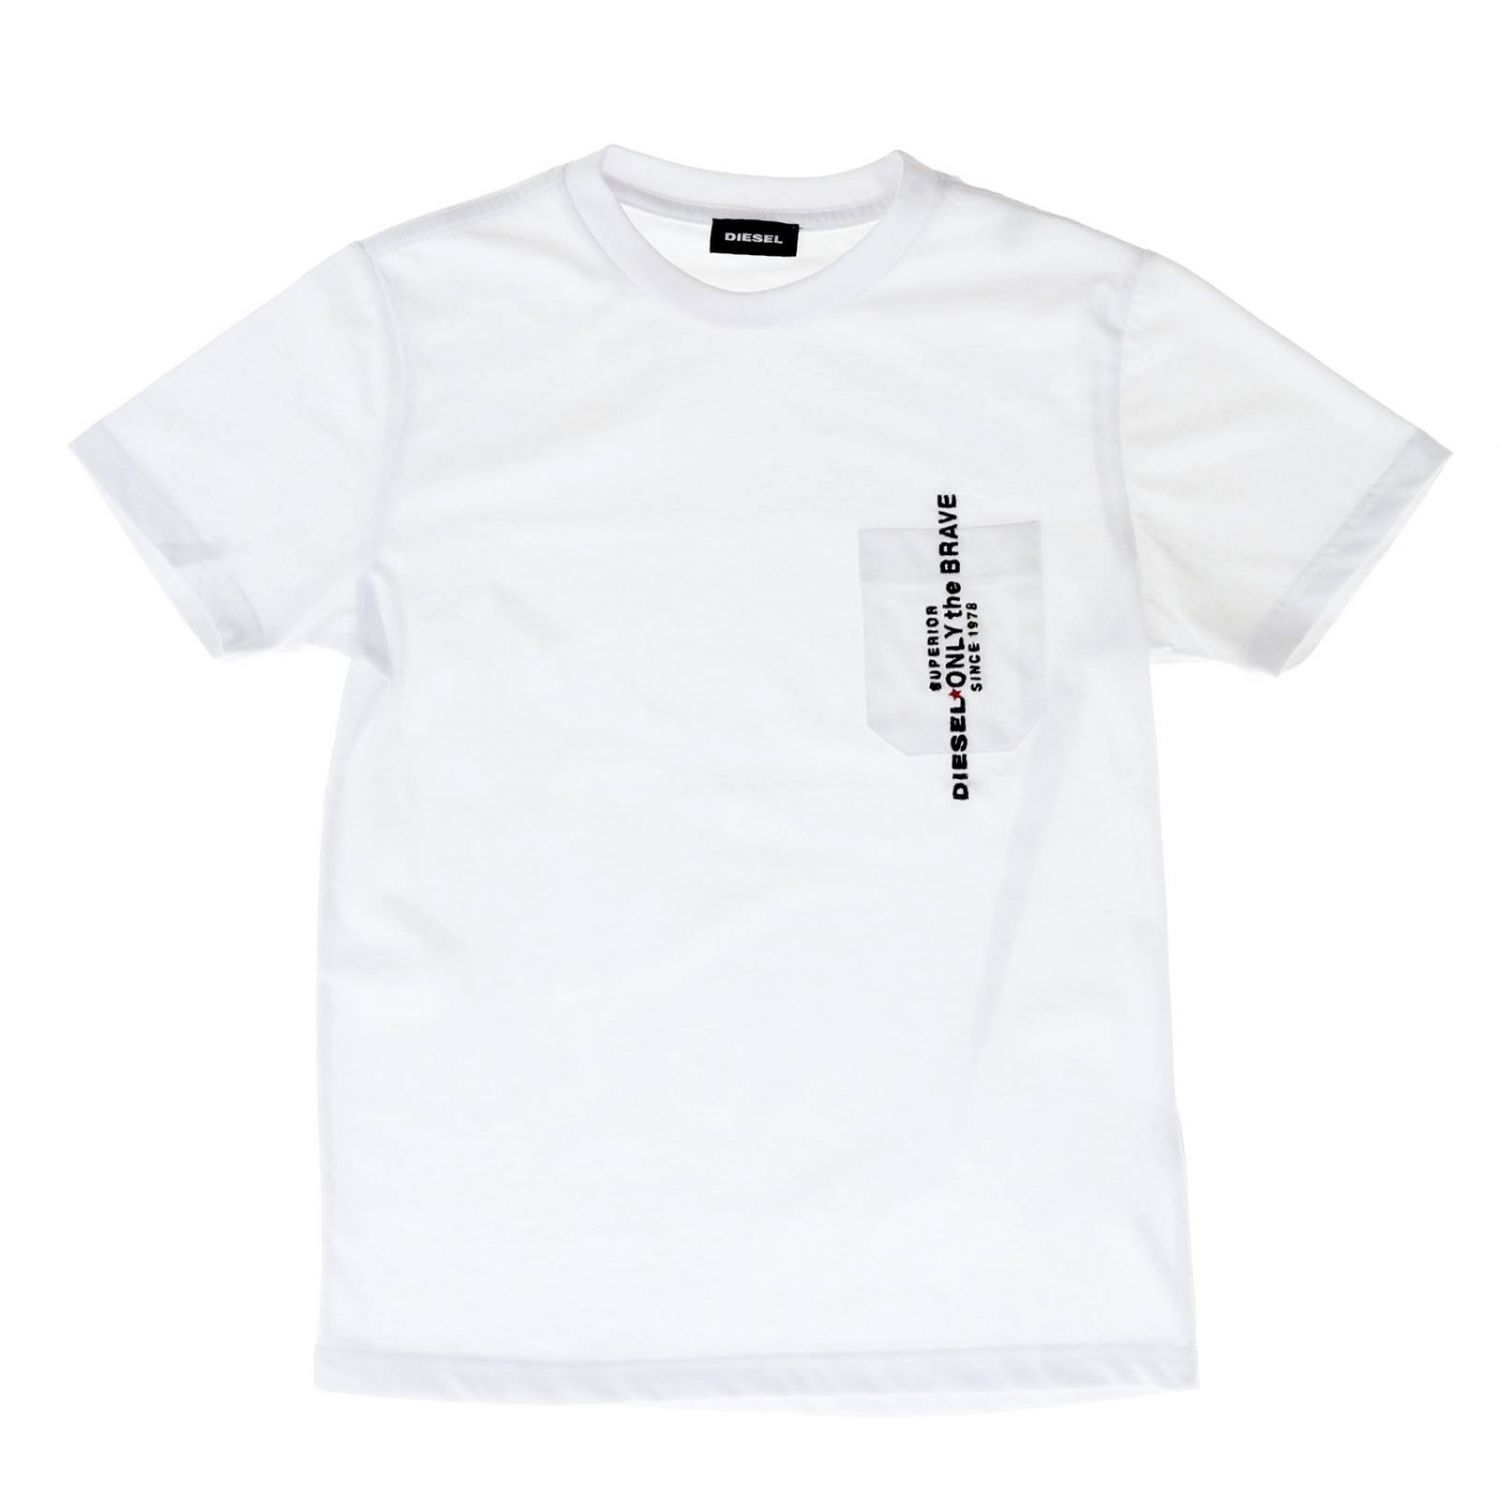 Diesel Outlet: T-shirt kids | T-Shirt Diesel Kids White | T-Shirt ...